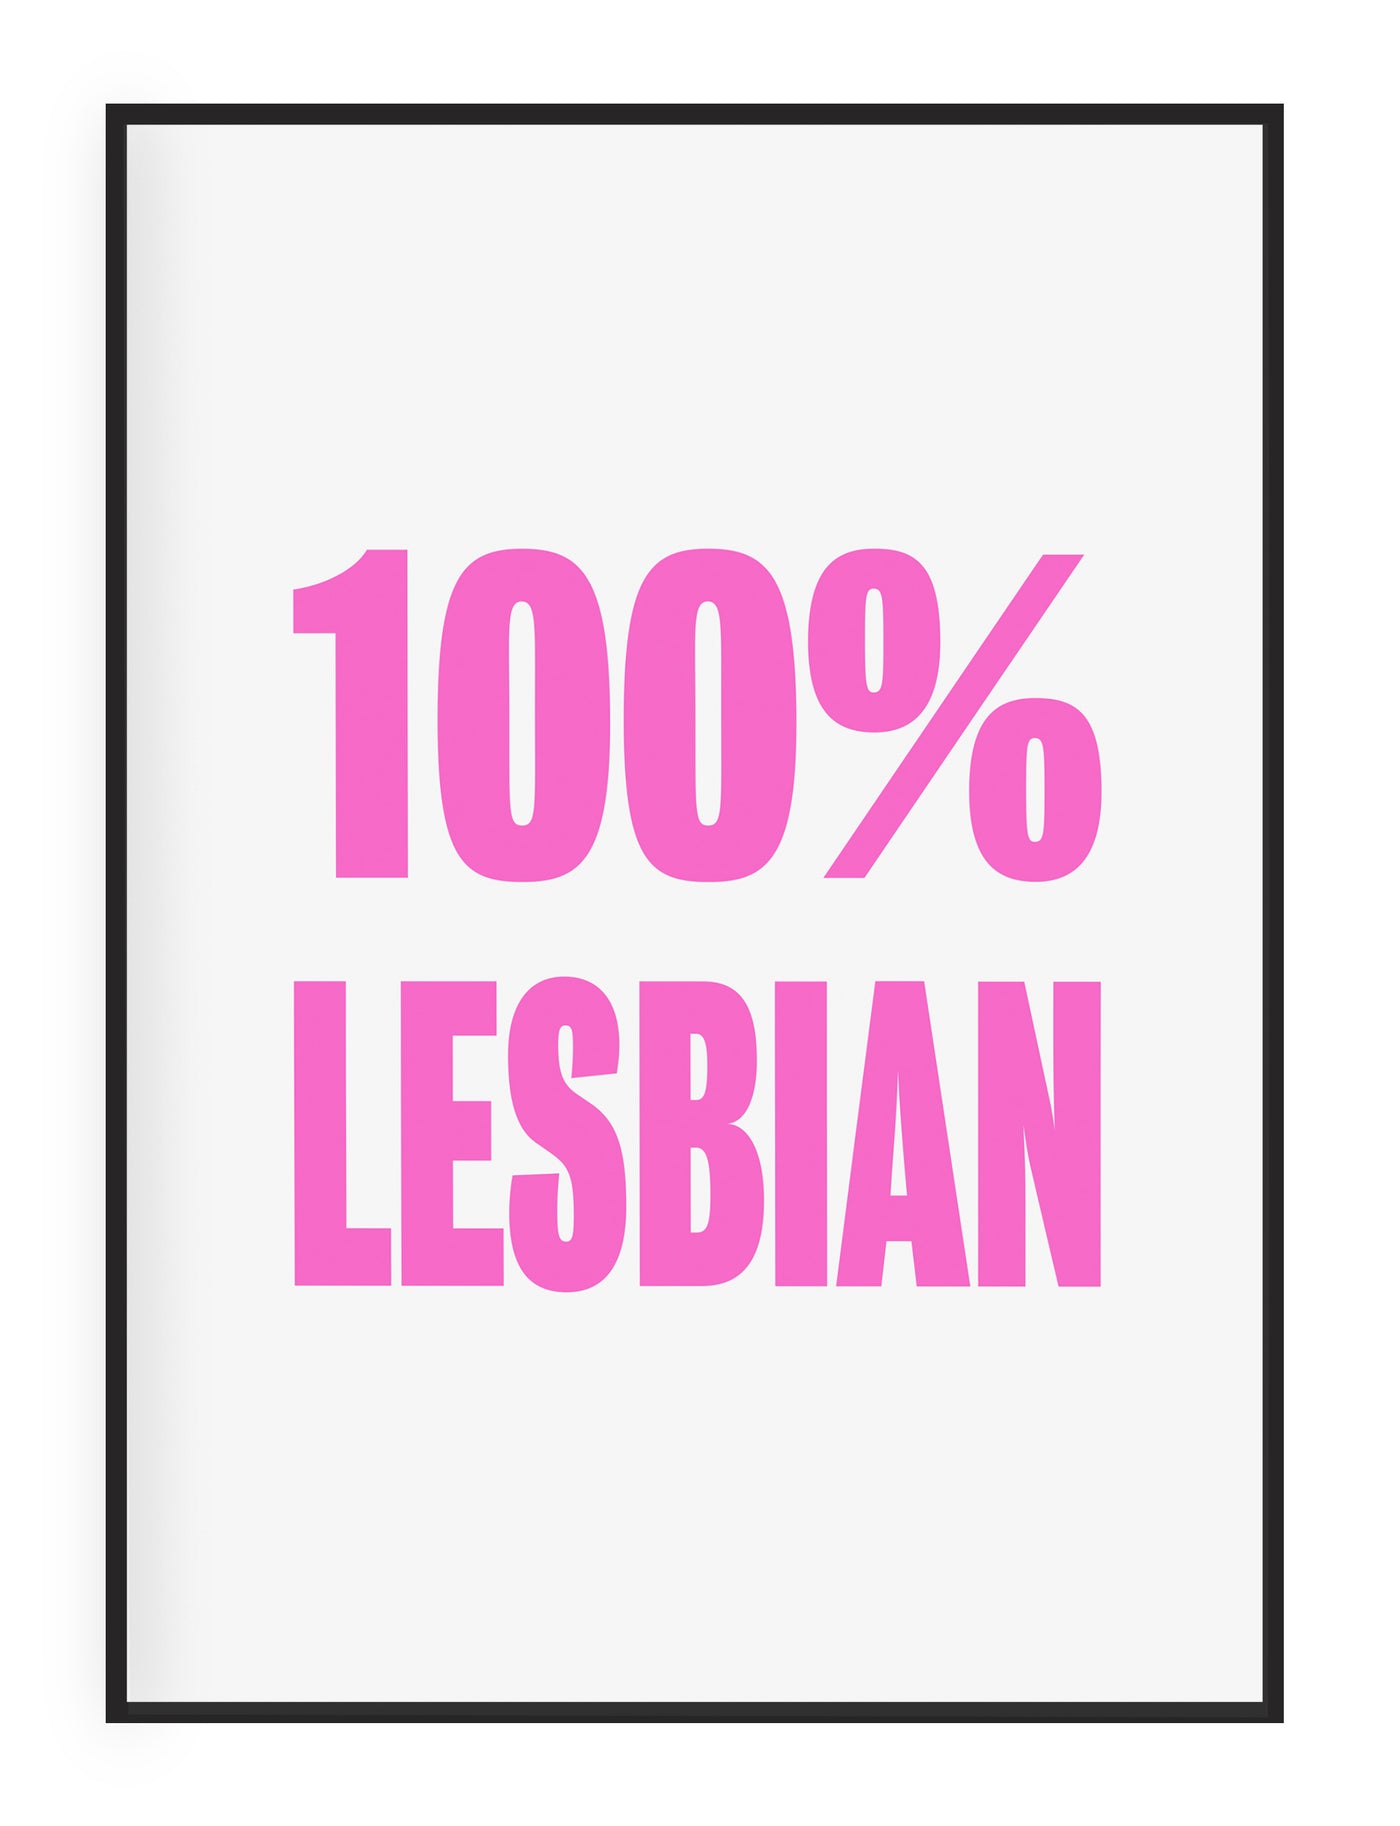 100% Lesbian' Typographic Wall Art Print (Pink)